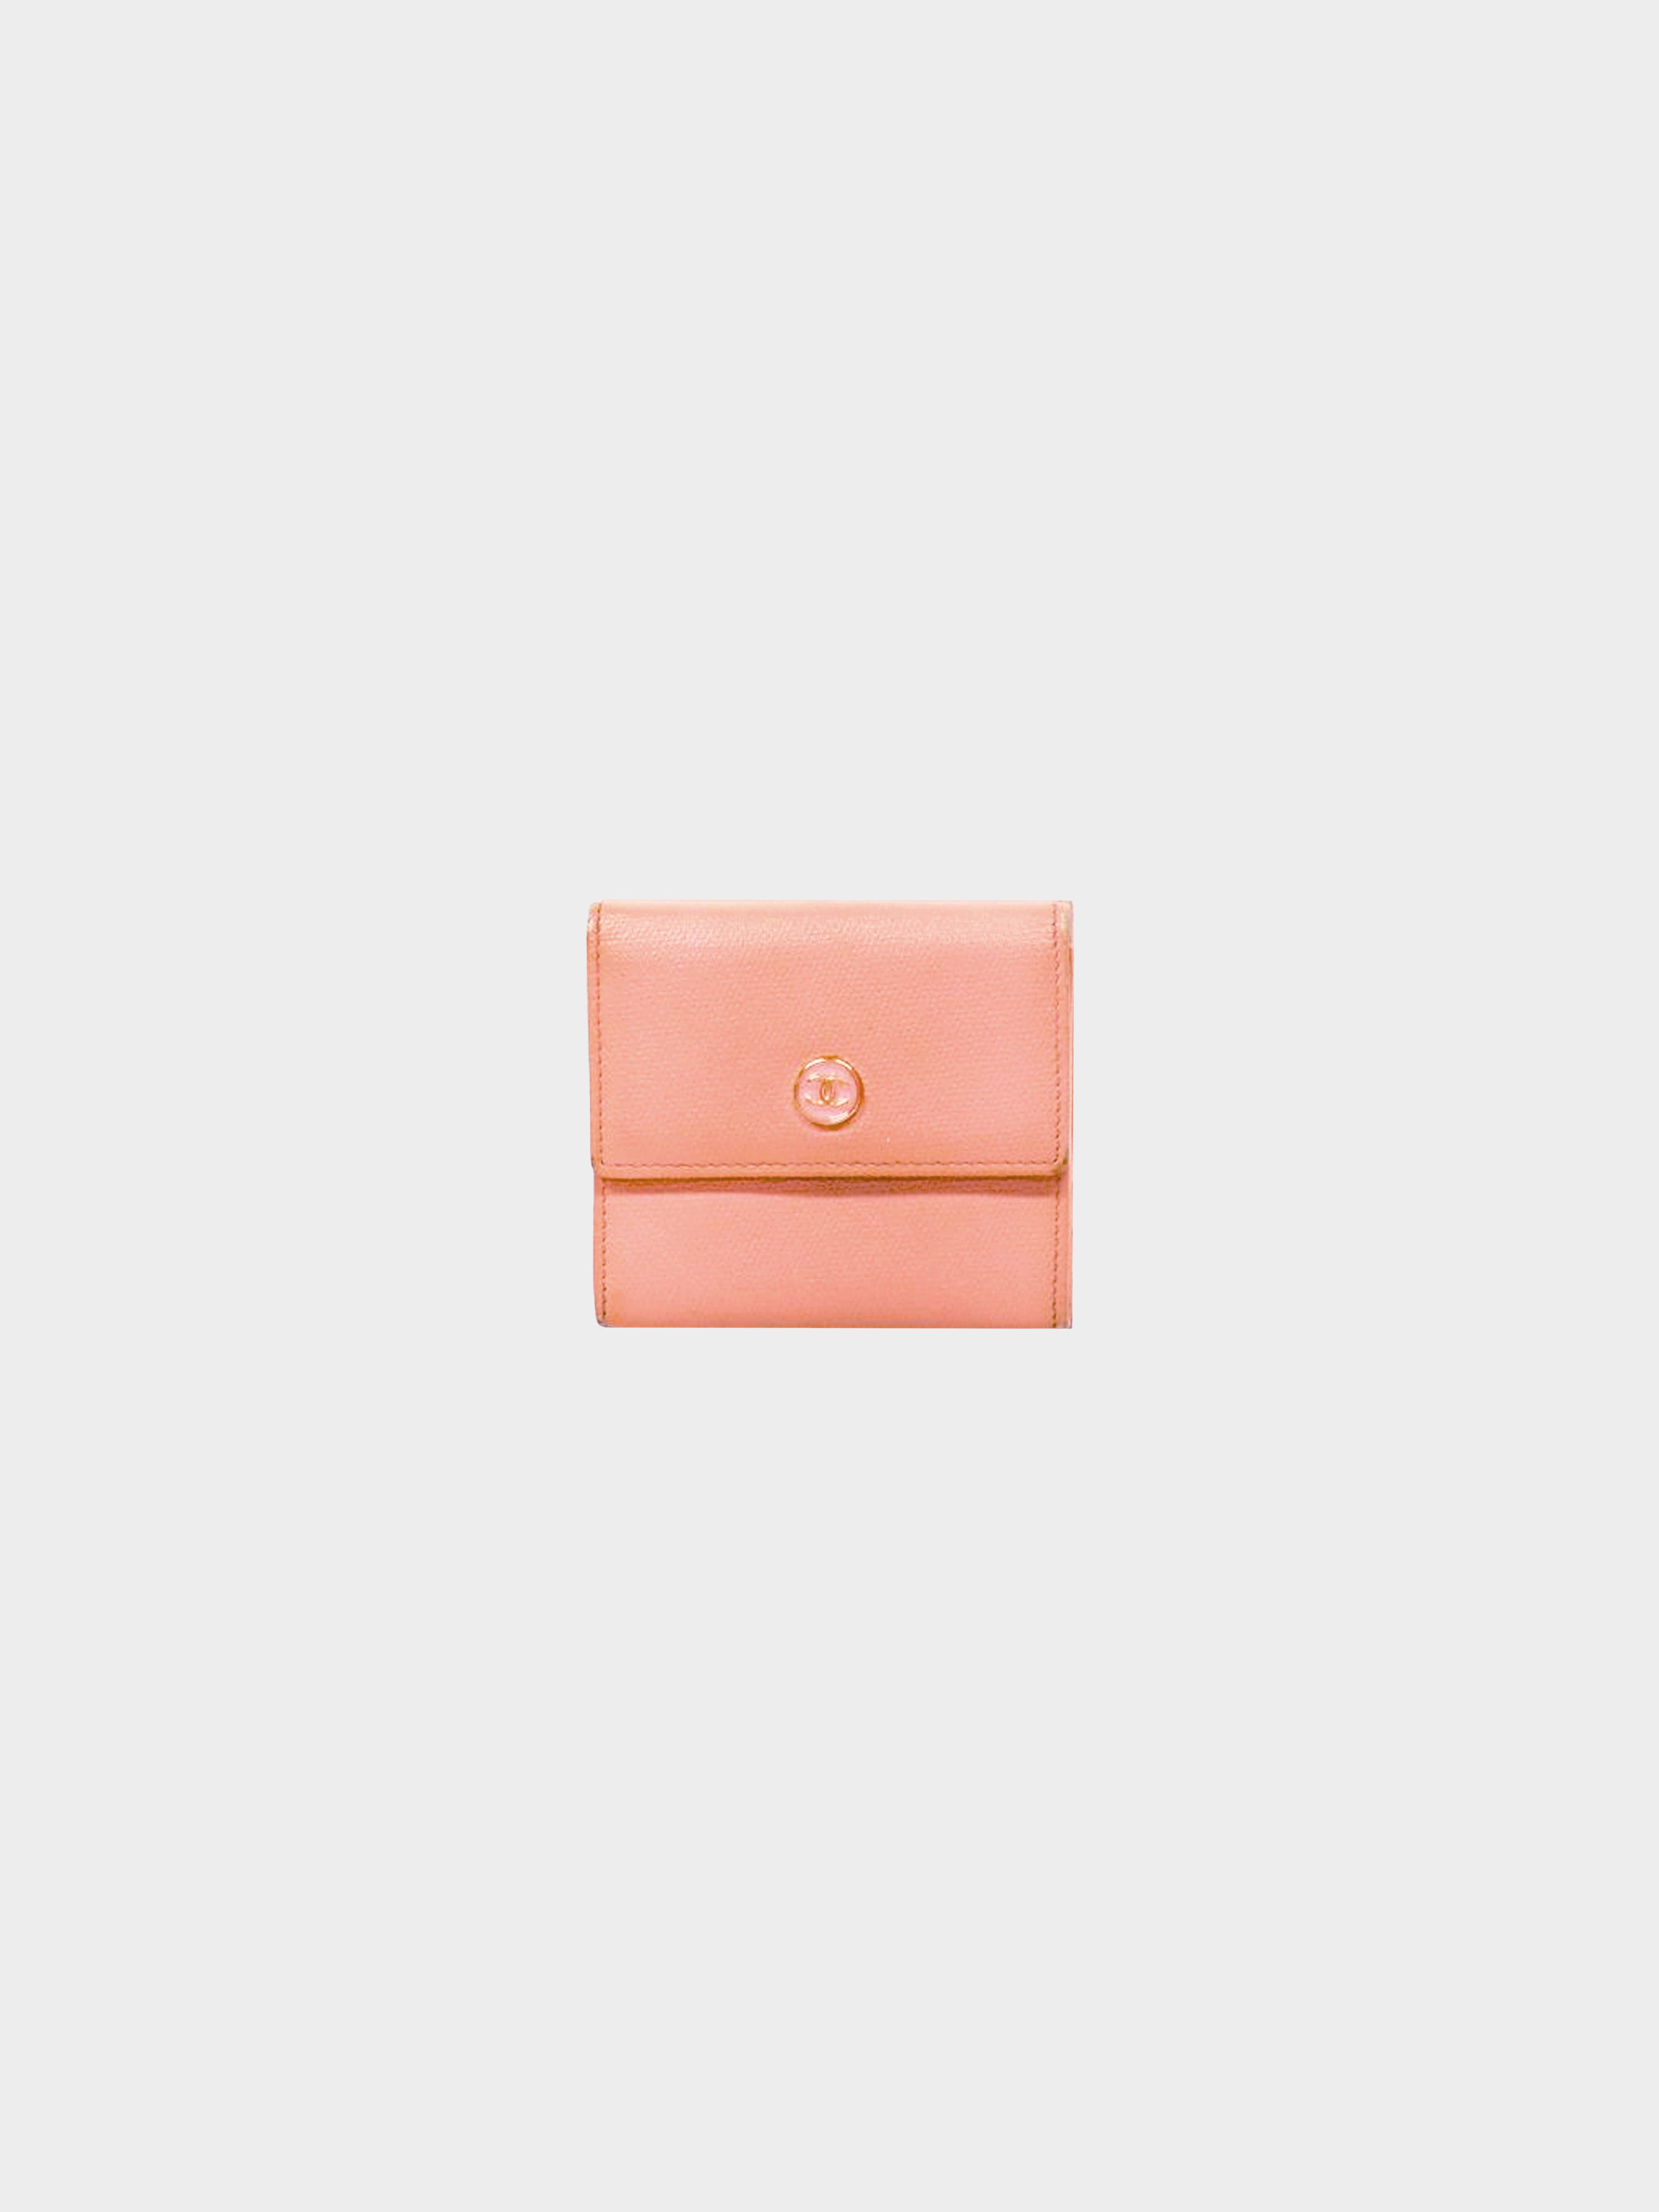 Chanel 2004 Coral Pink Caviar Wallet · INTO